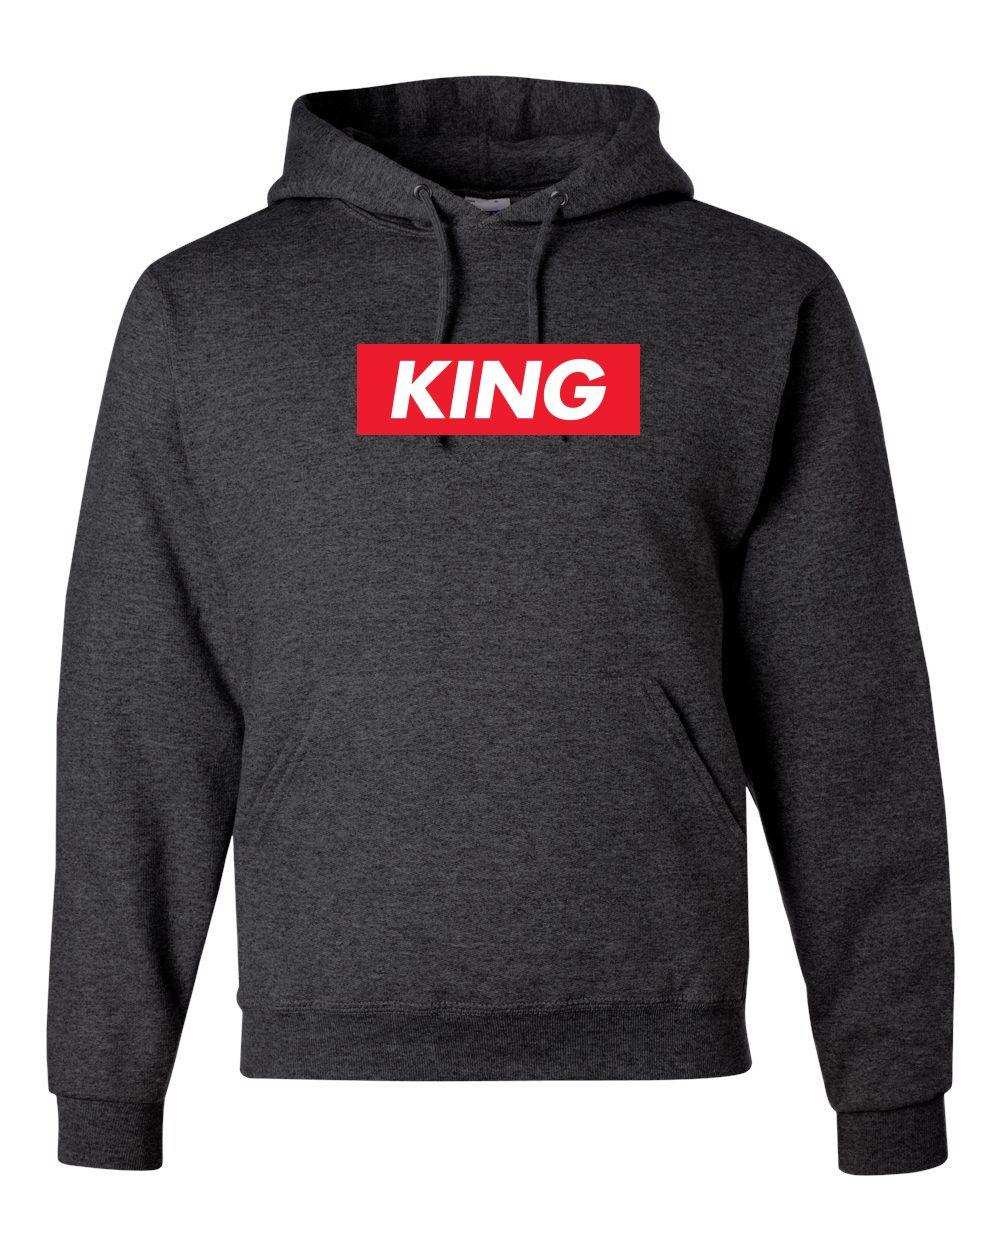 Savage King Logo - King Savage Logo Mens Graphic Hooded Sweatshirt Birthday Hoodie | eBay